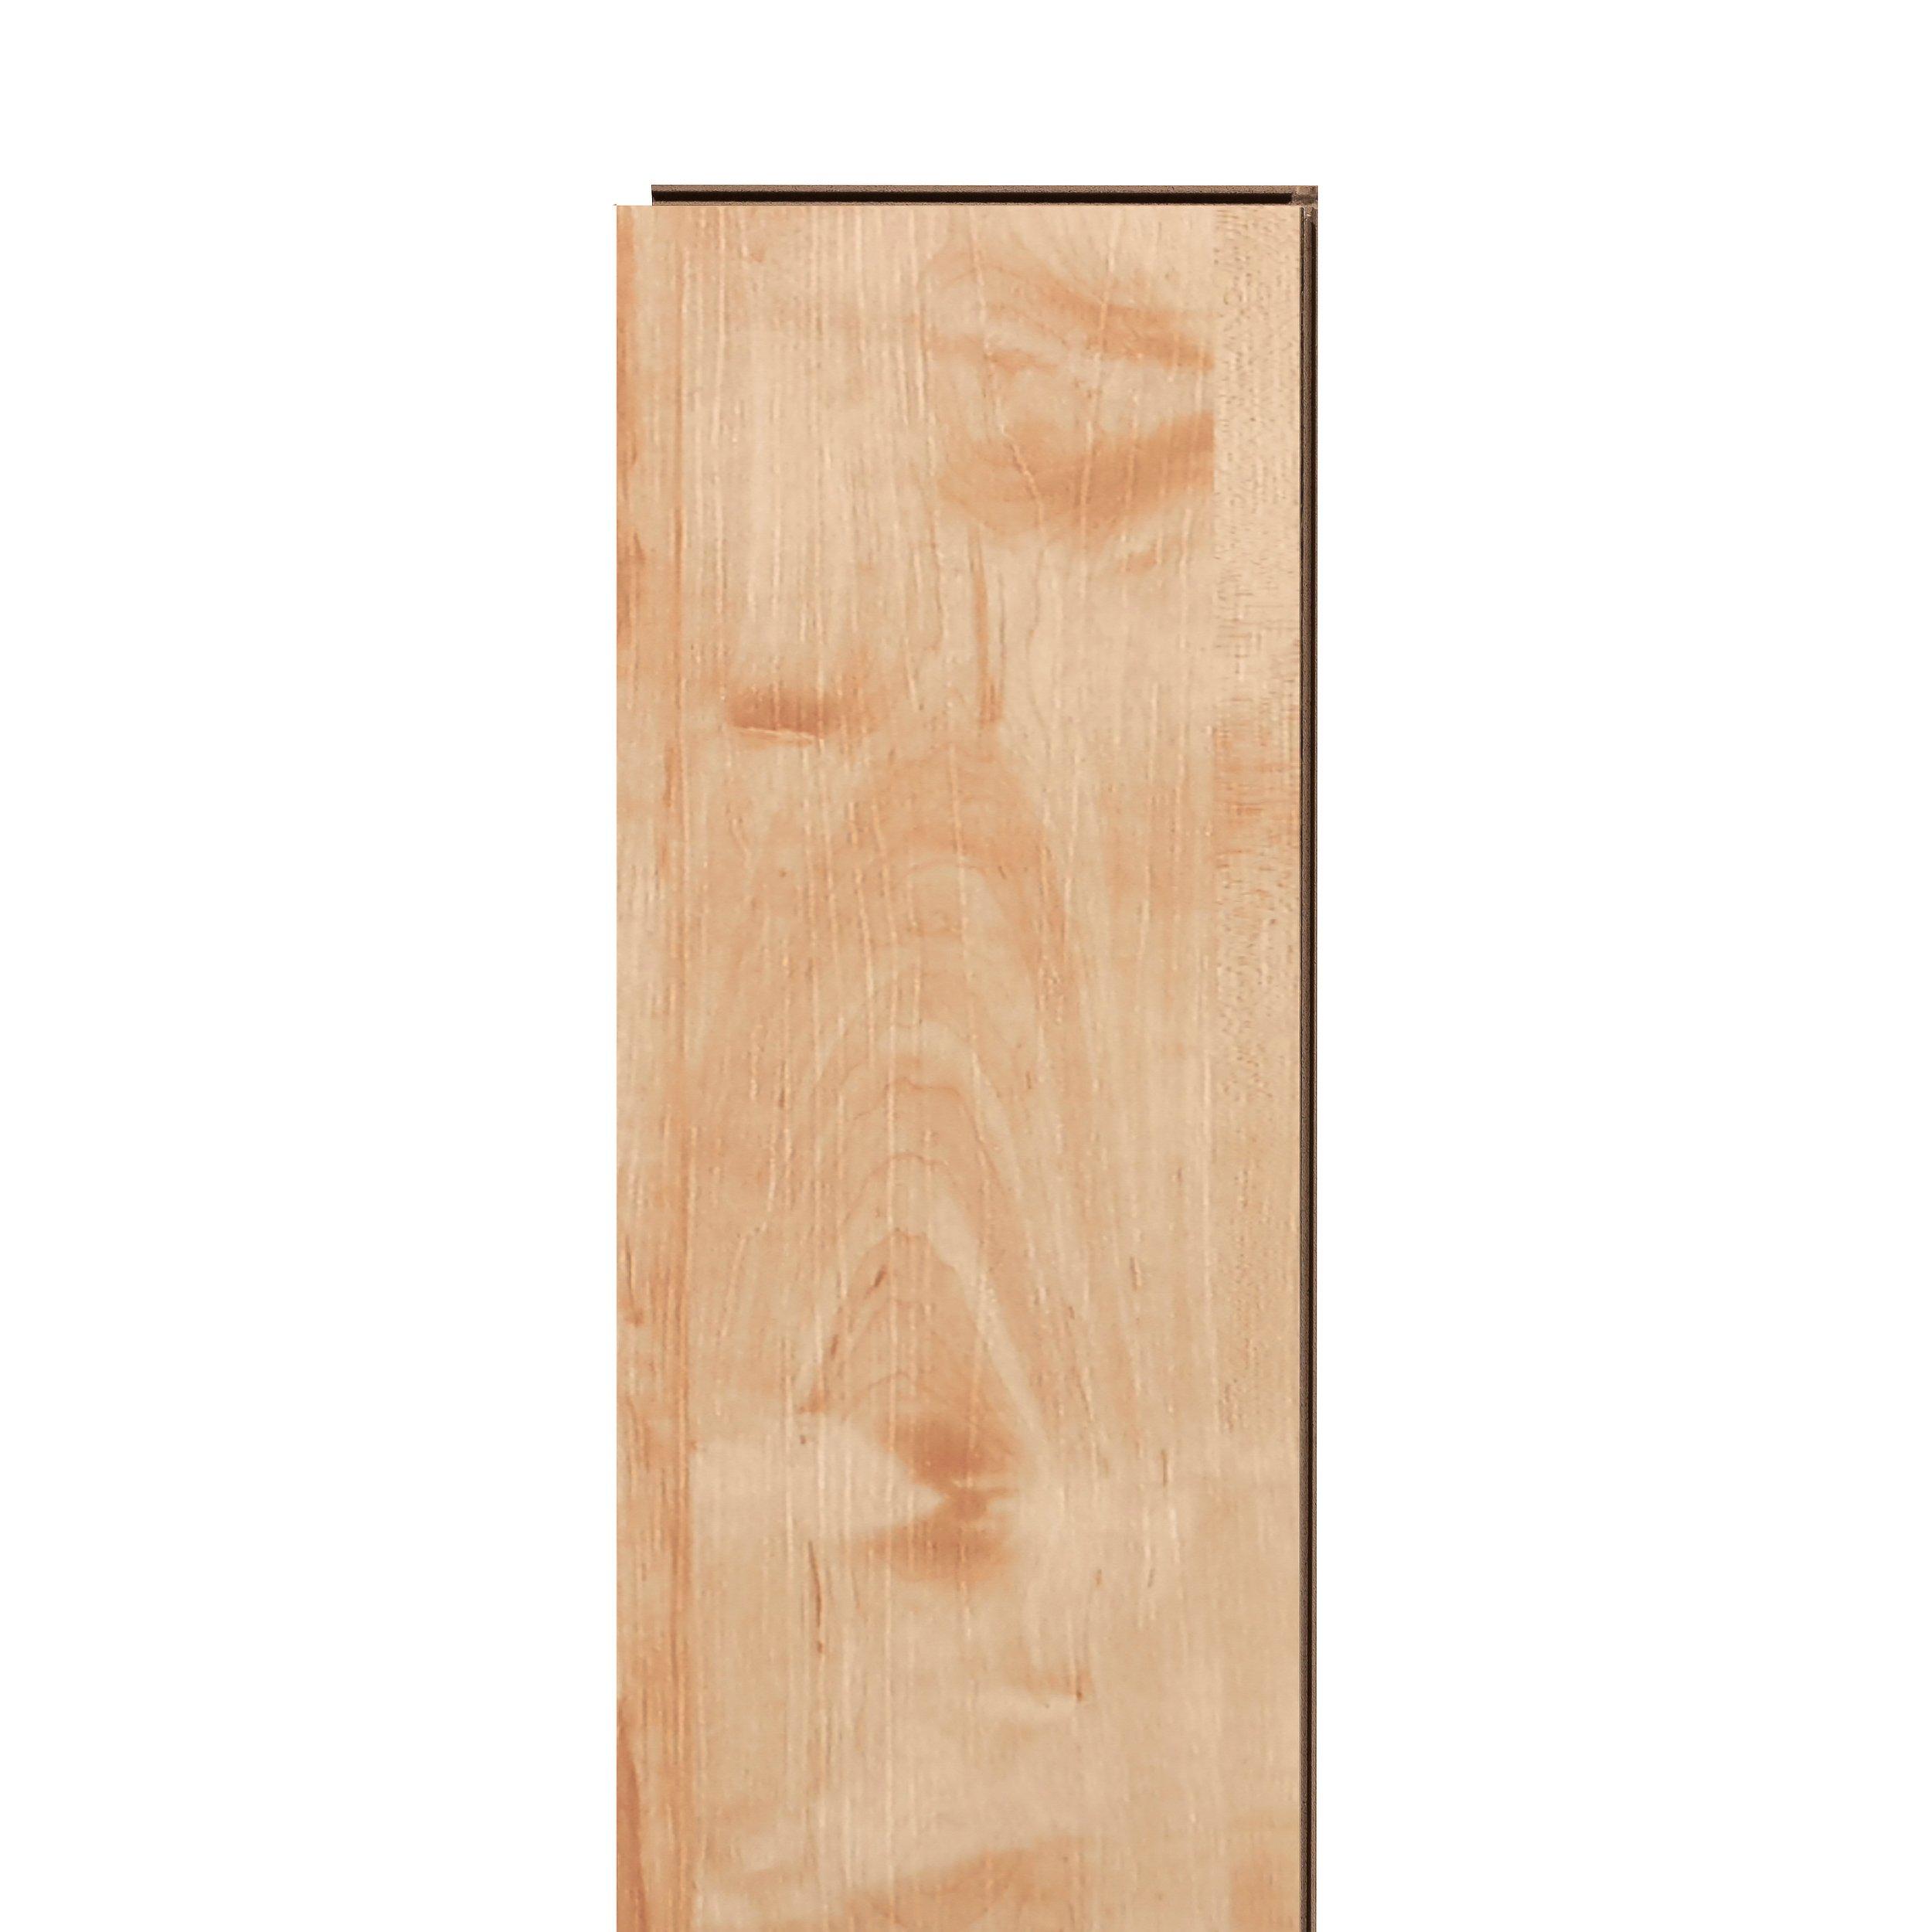 Spalted Maple Rigid Core Luxury Vinyl Plank - Cork Back